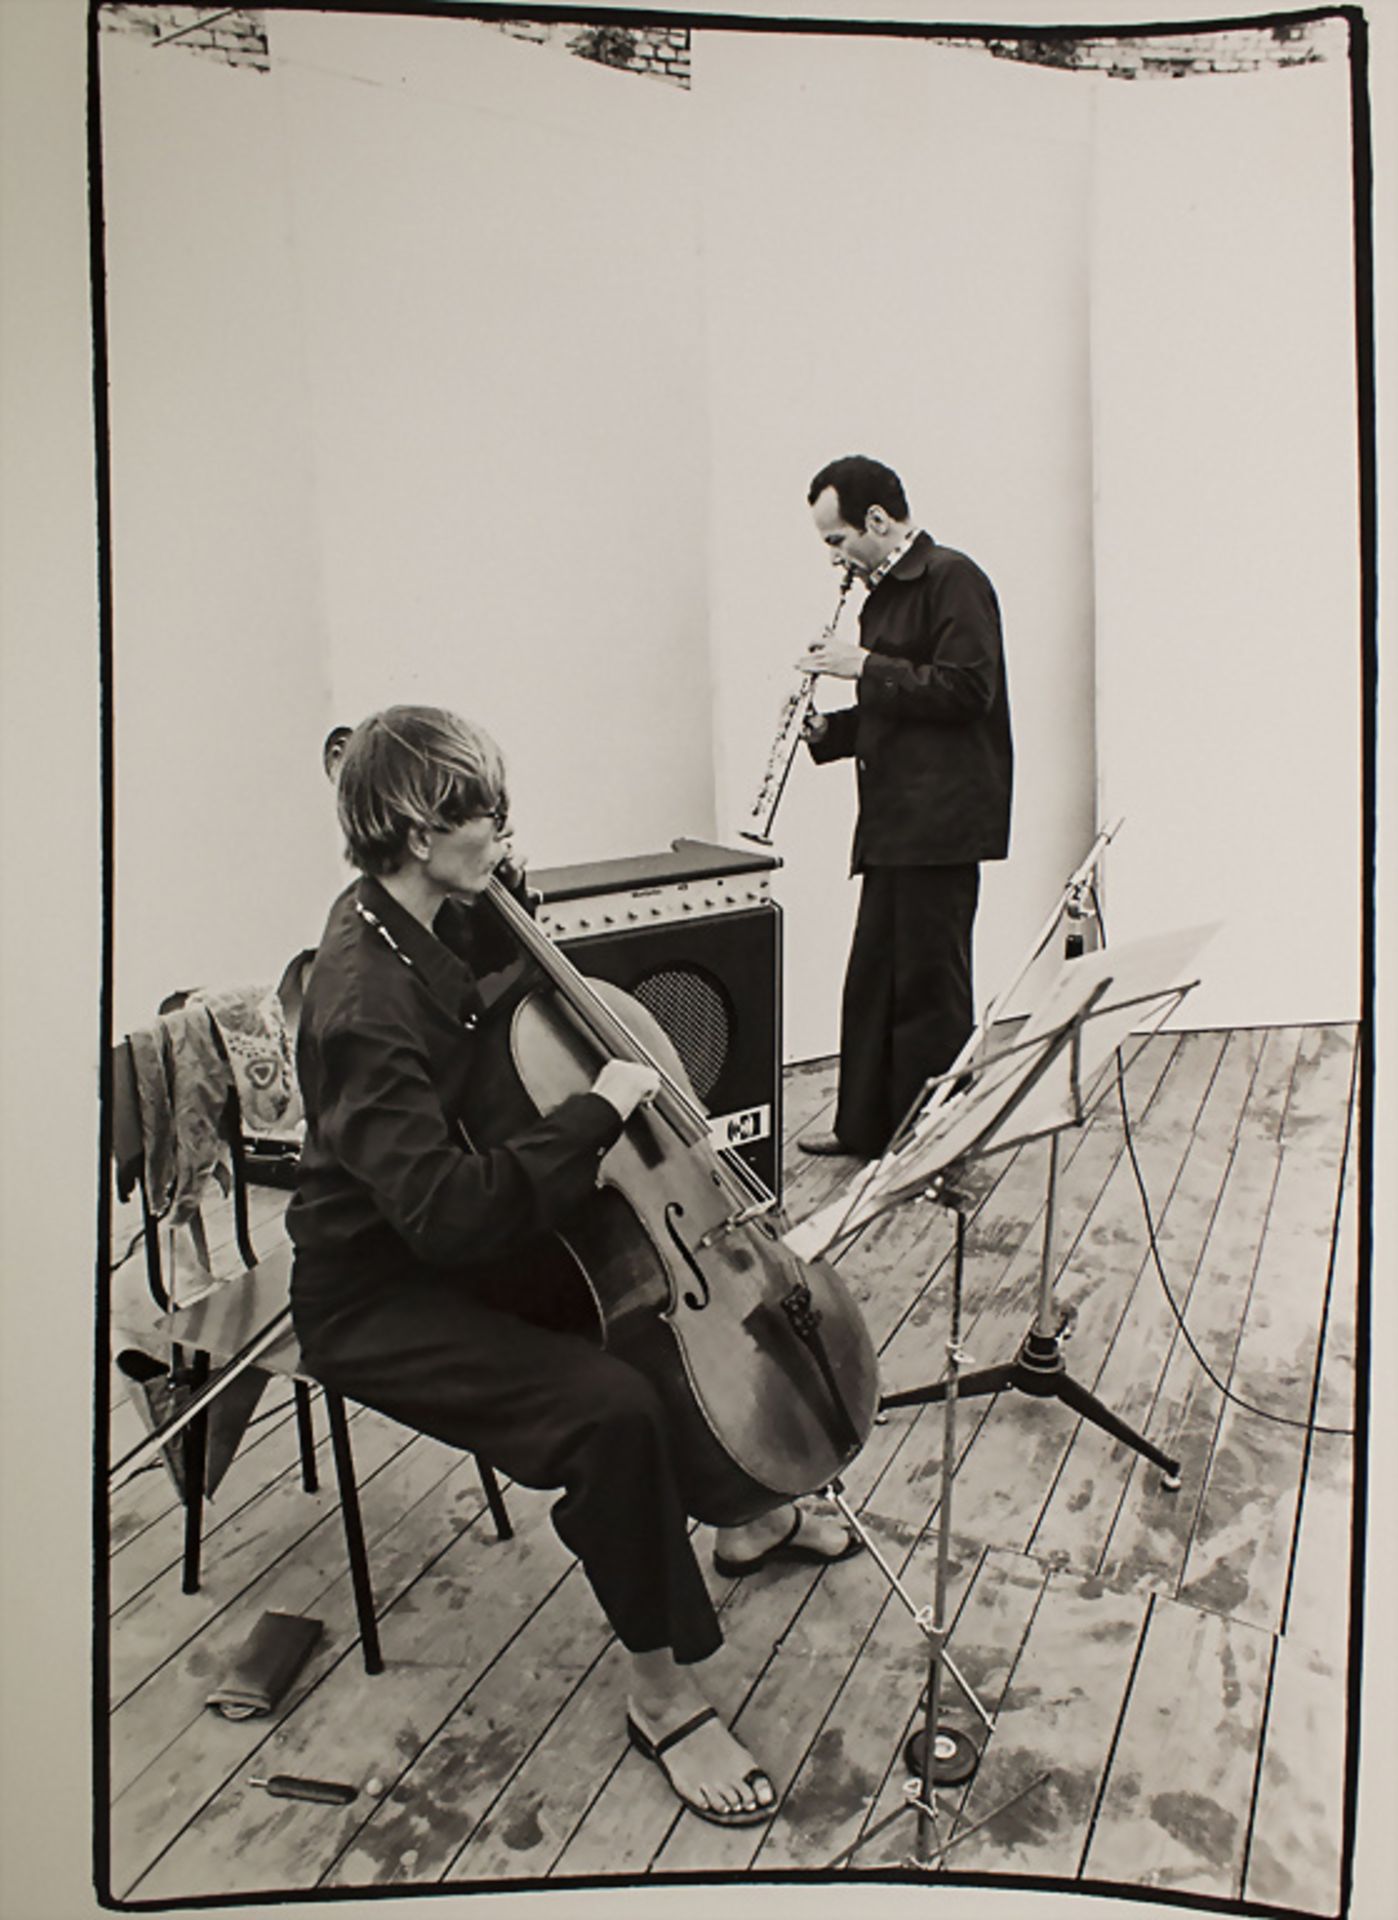 Konzertfoto Roberto Masotti / A concert photograph of R. Masotti